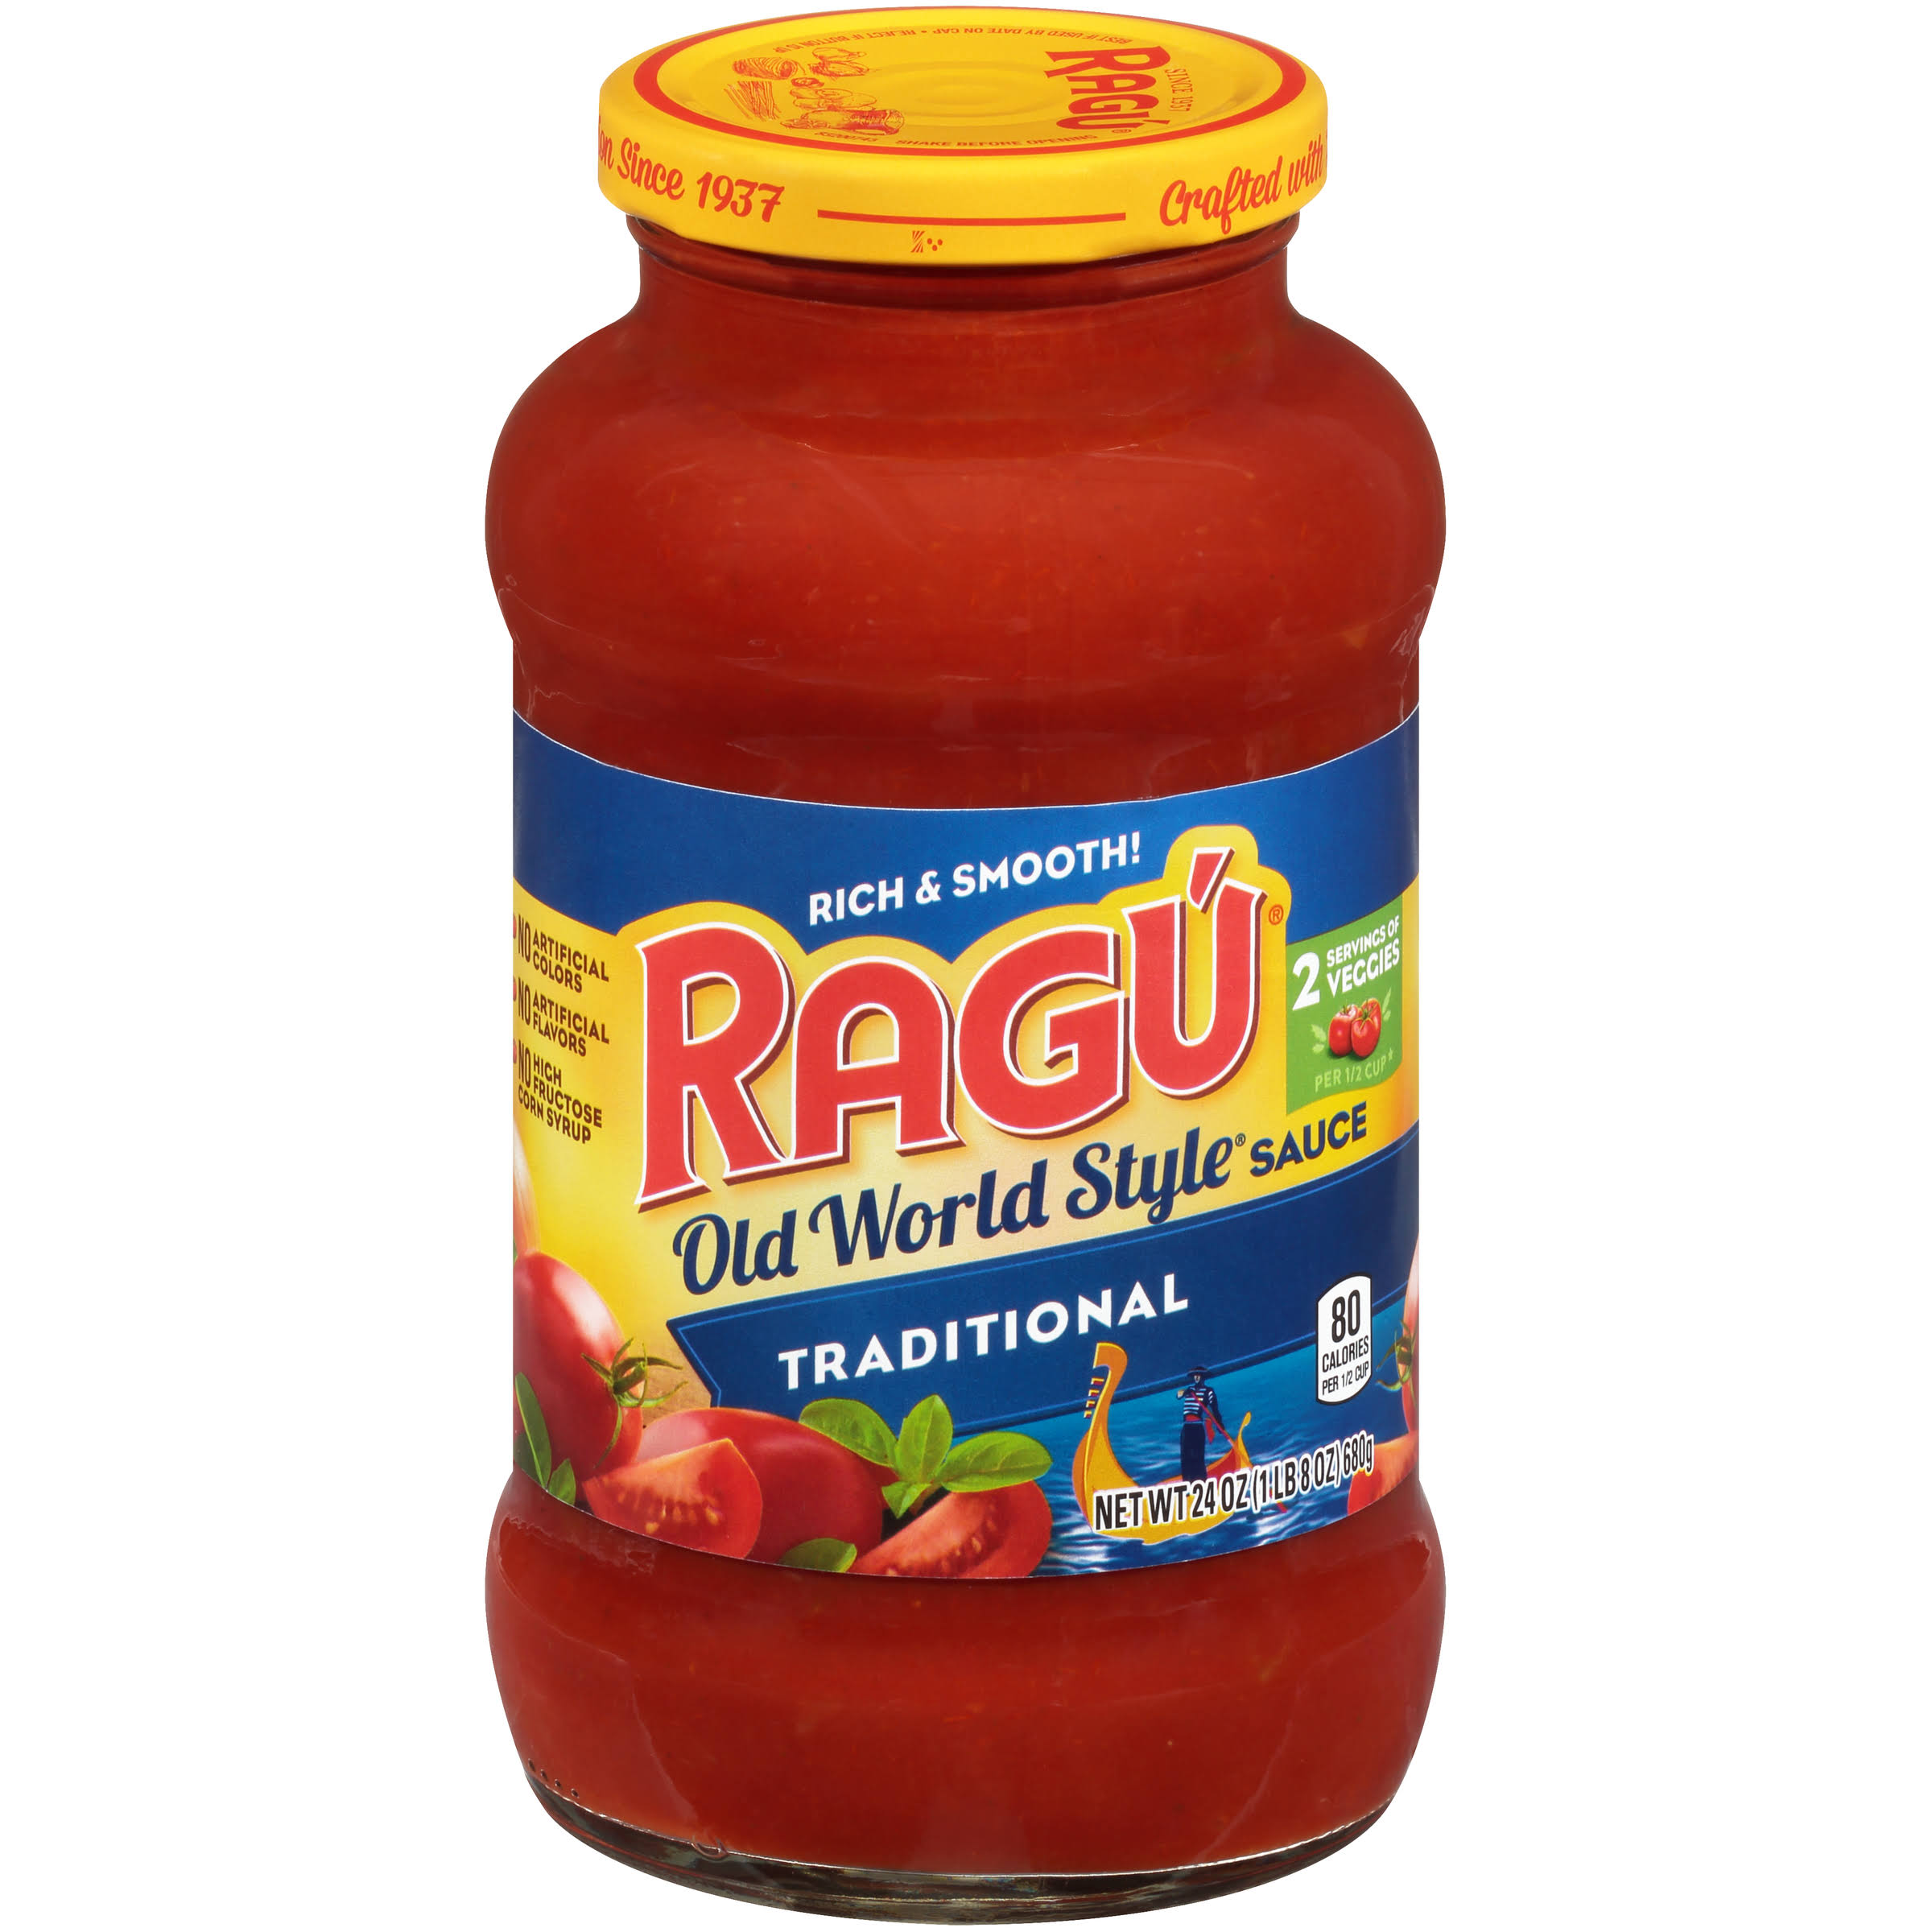 Ragú Old World Style Pasta Sauce - Traditional, 24oz